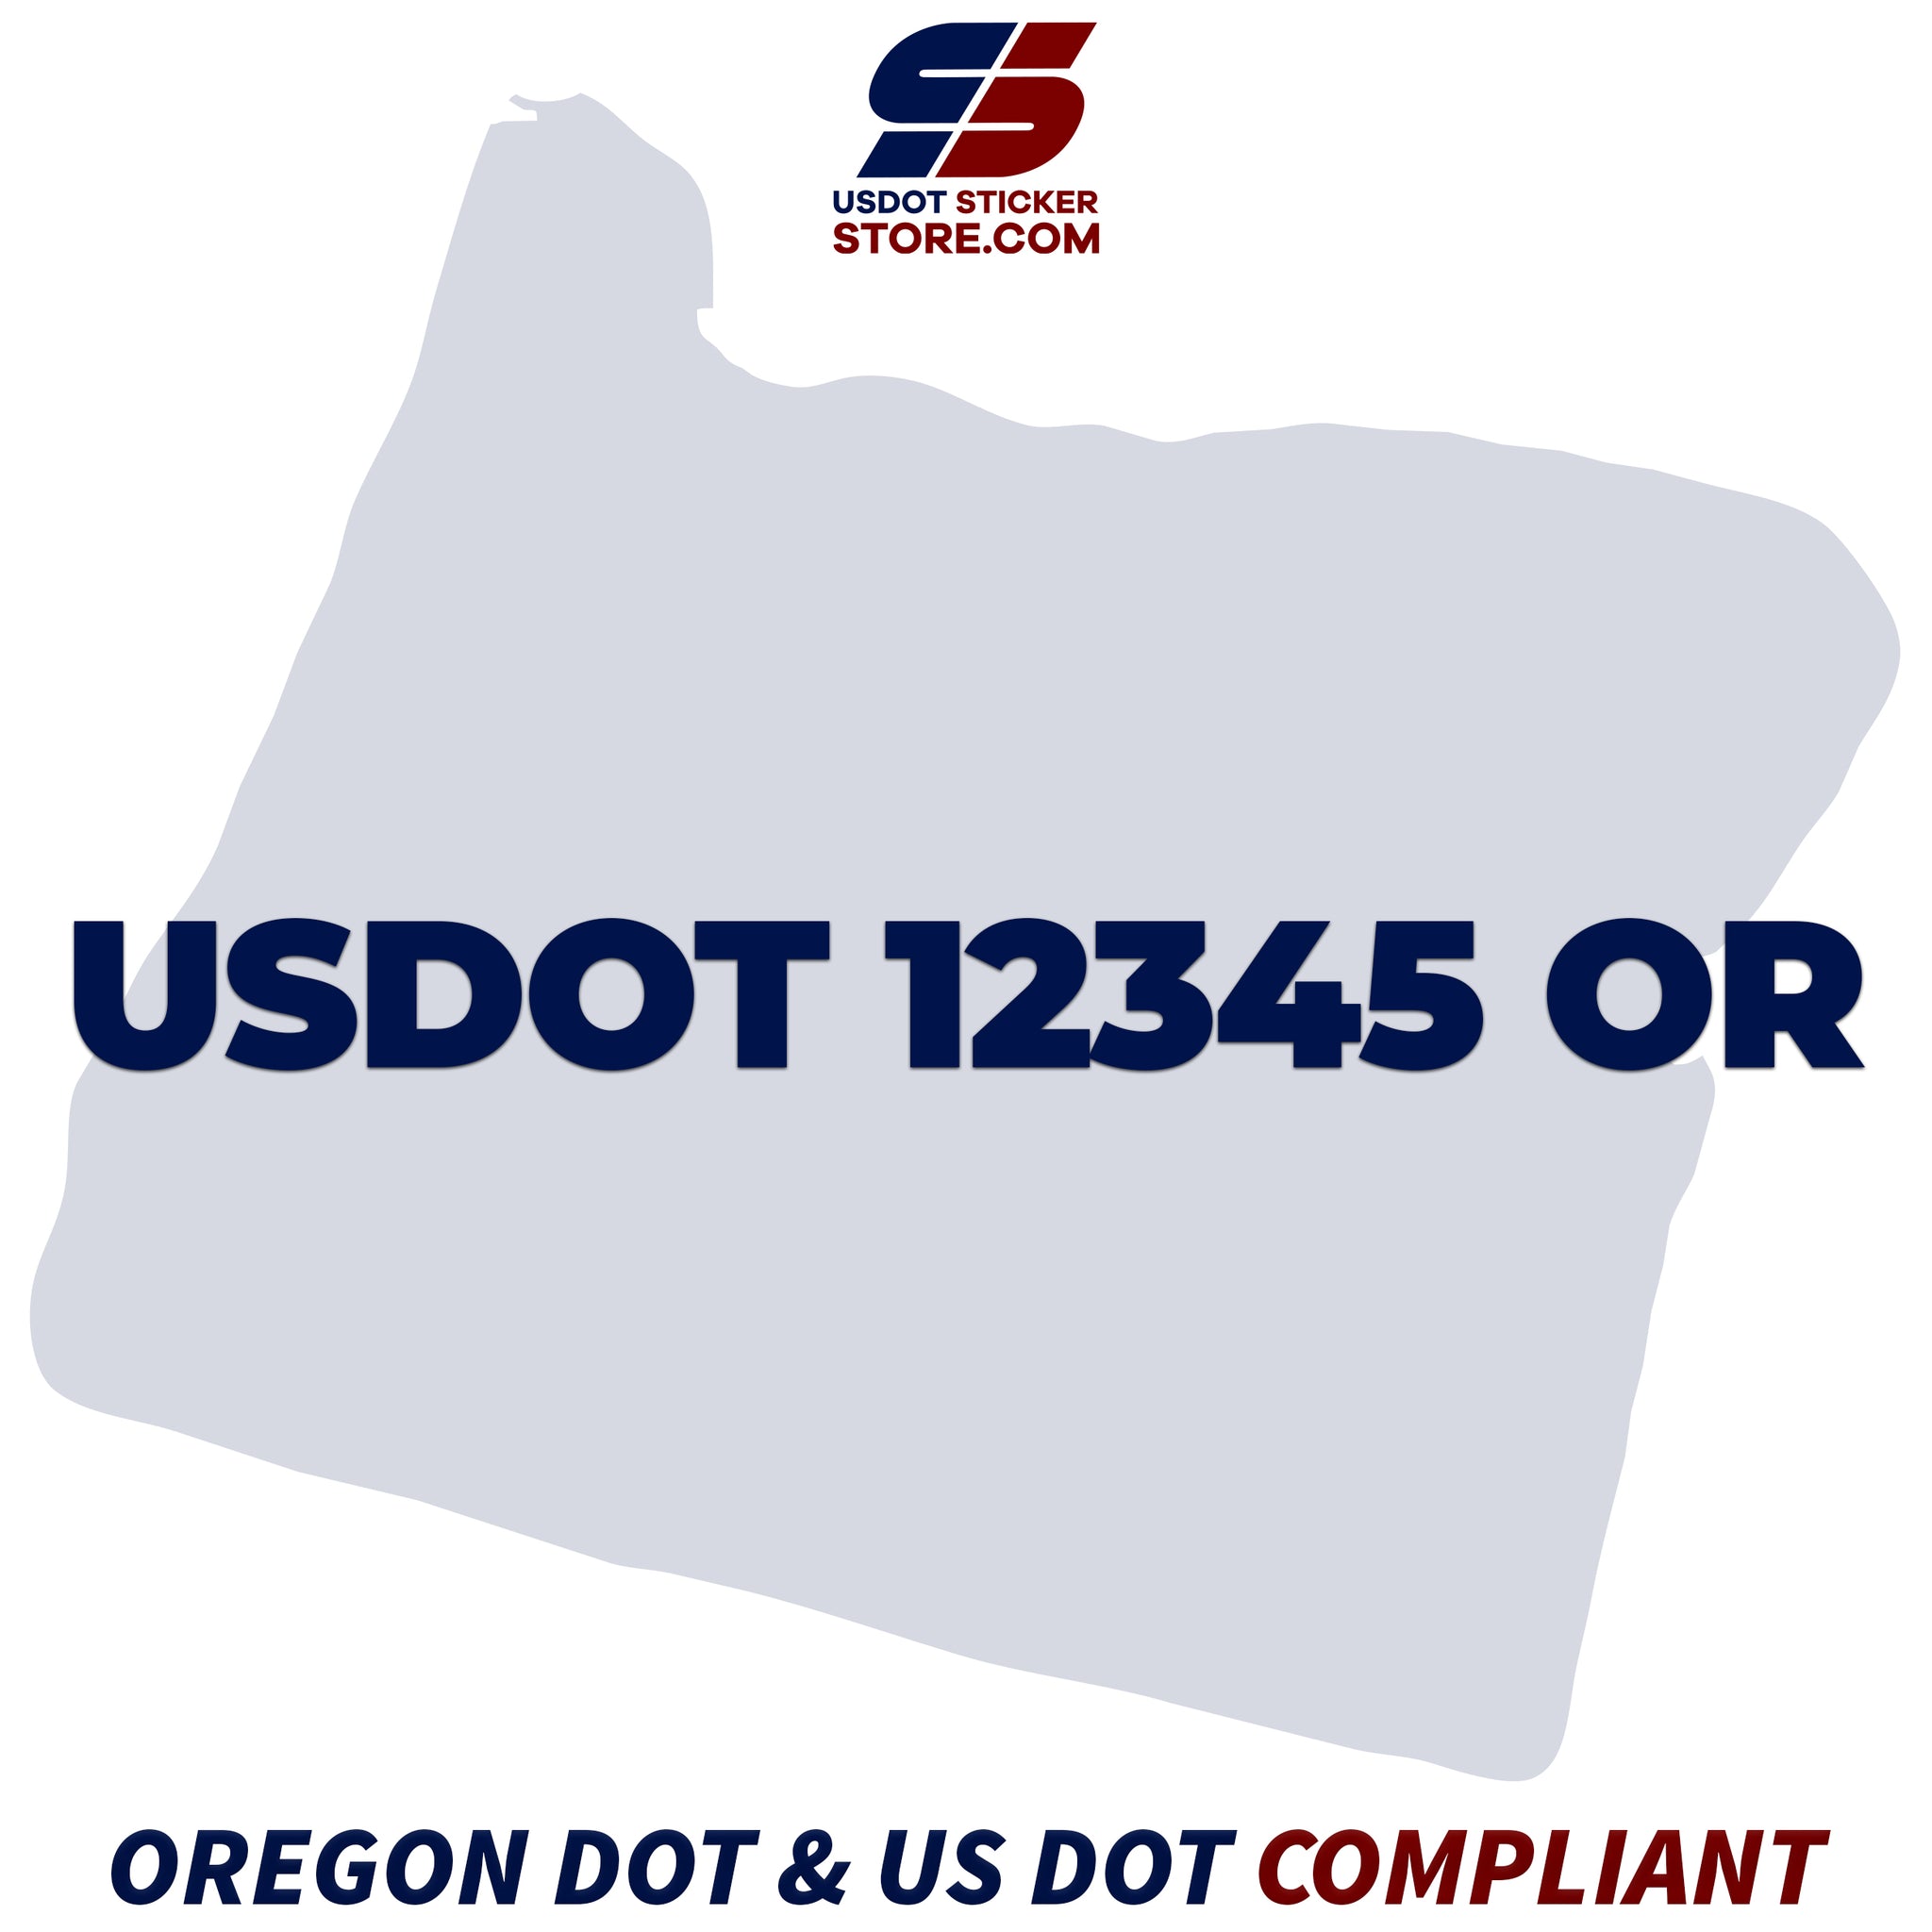 usdot sticker Oregon